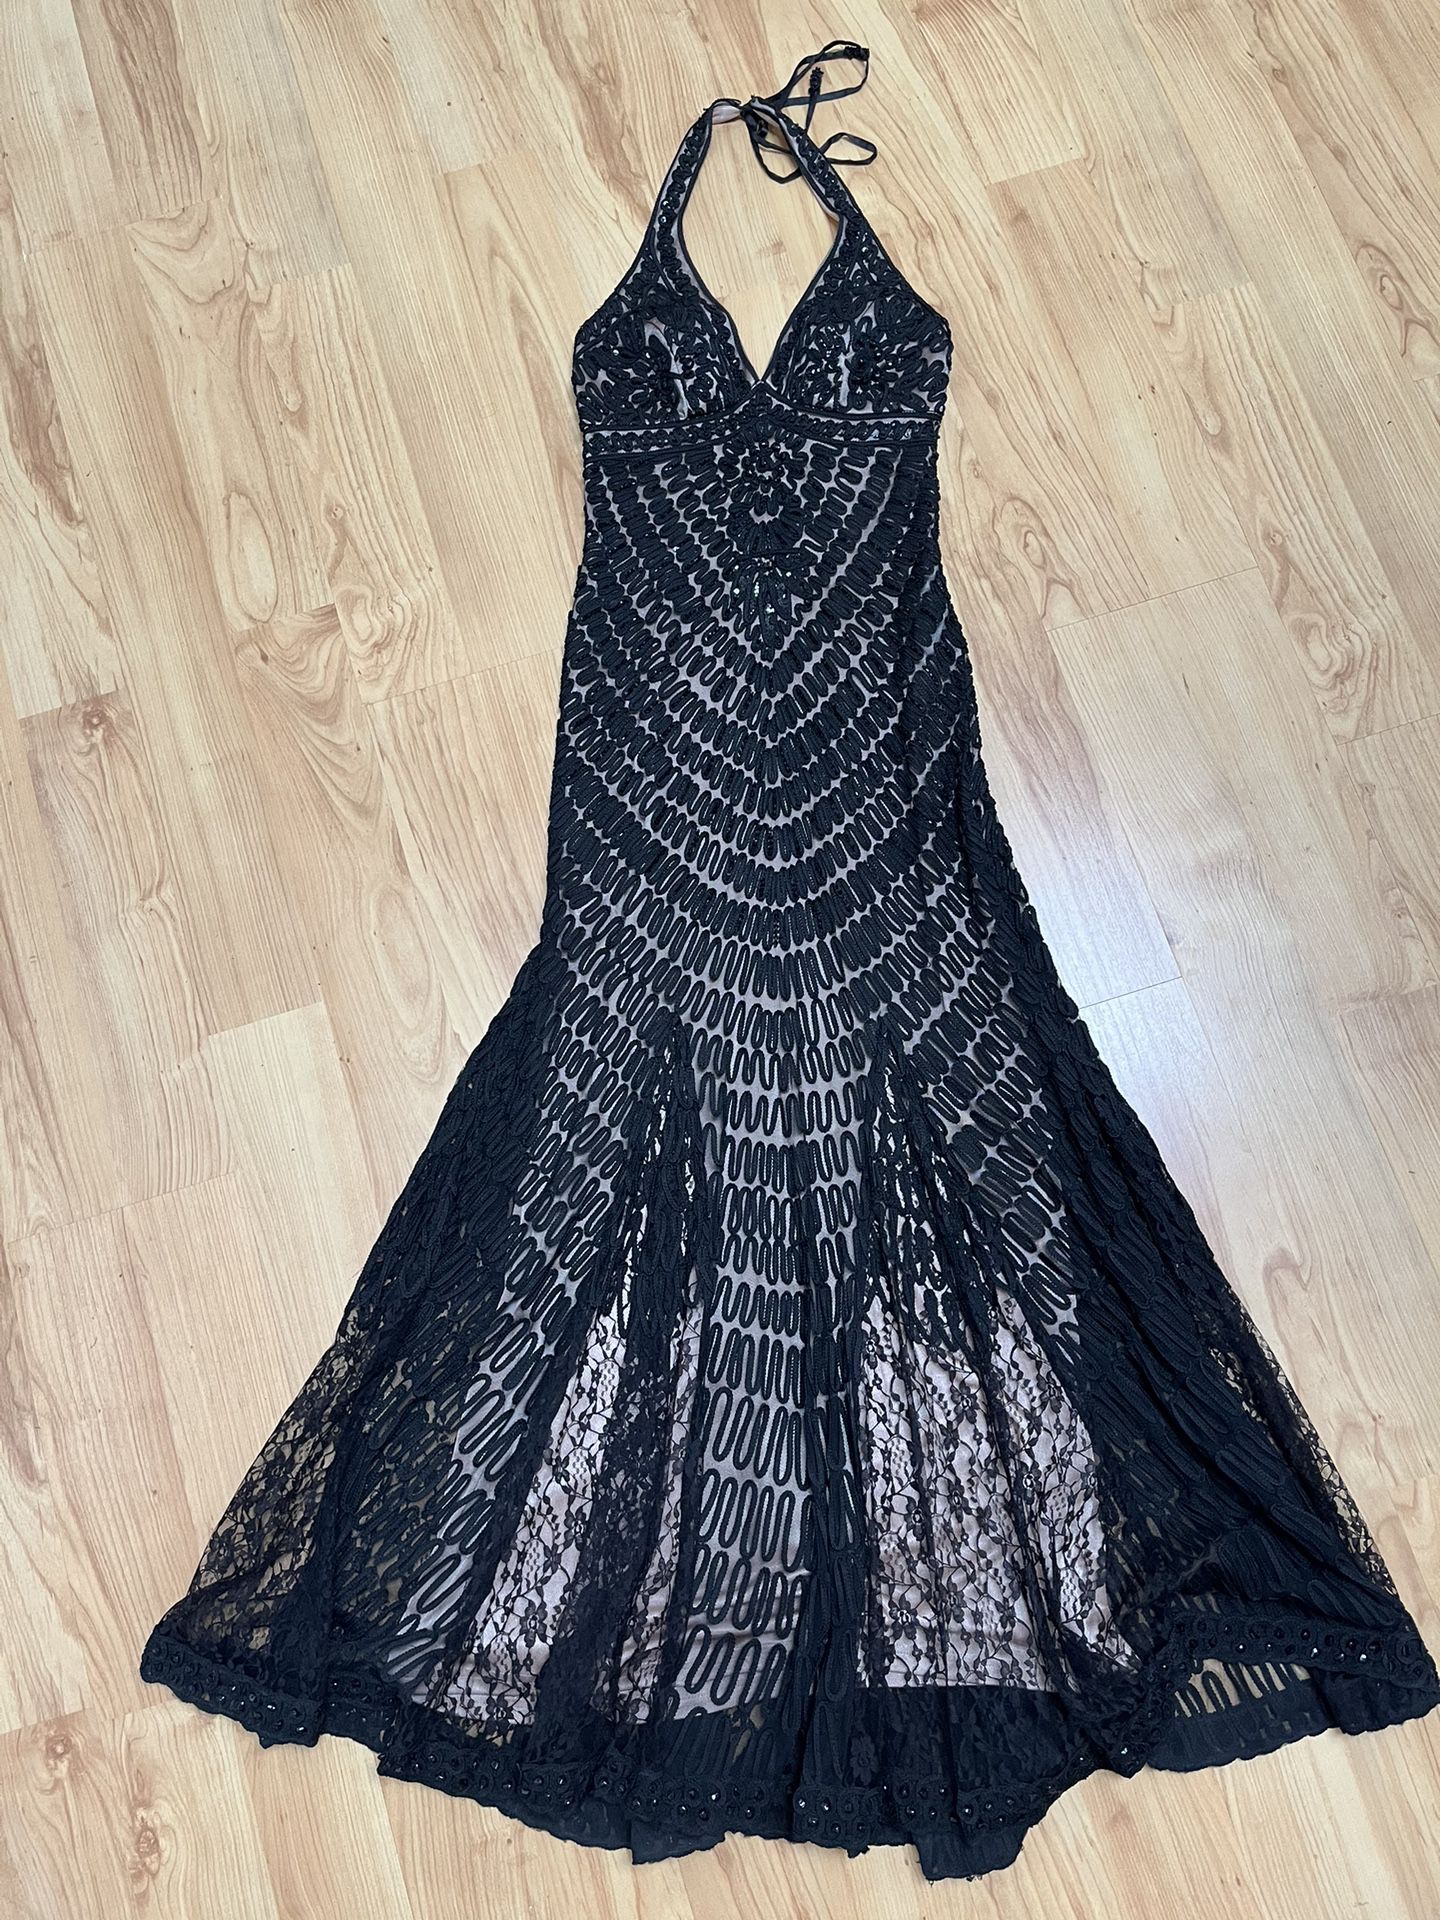 Prom Dress Sz S 6 Beaded Lace Black/ Nude Neiman Marcus 